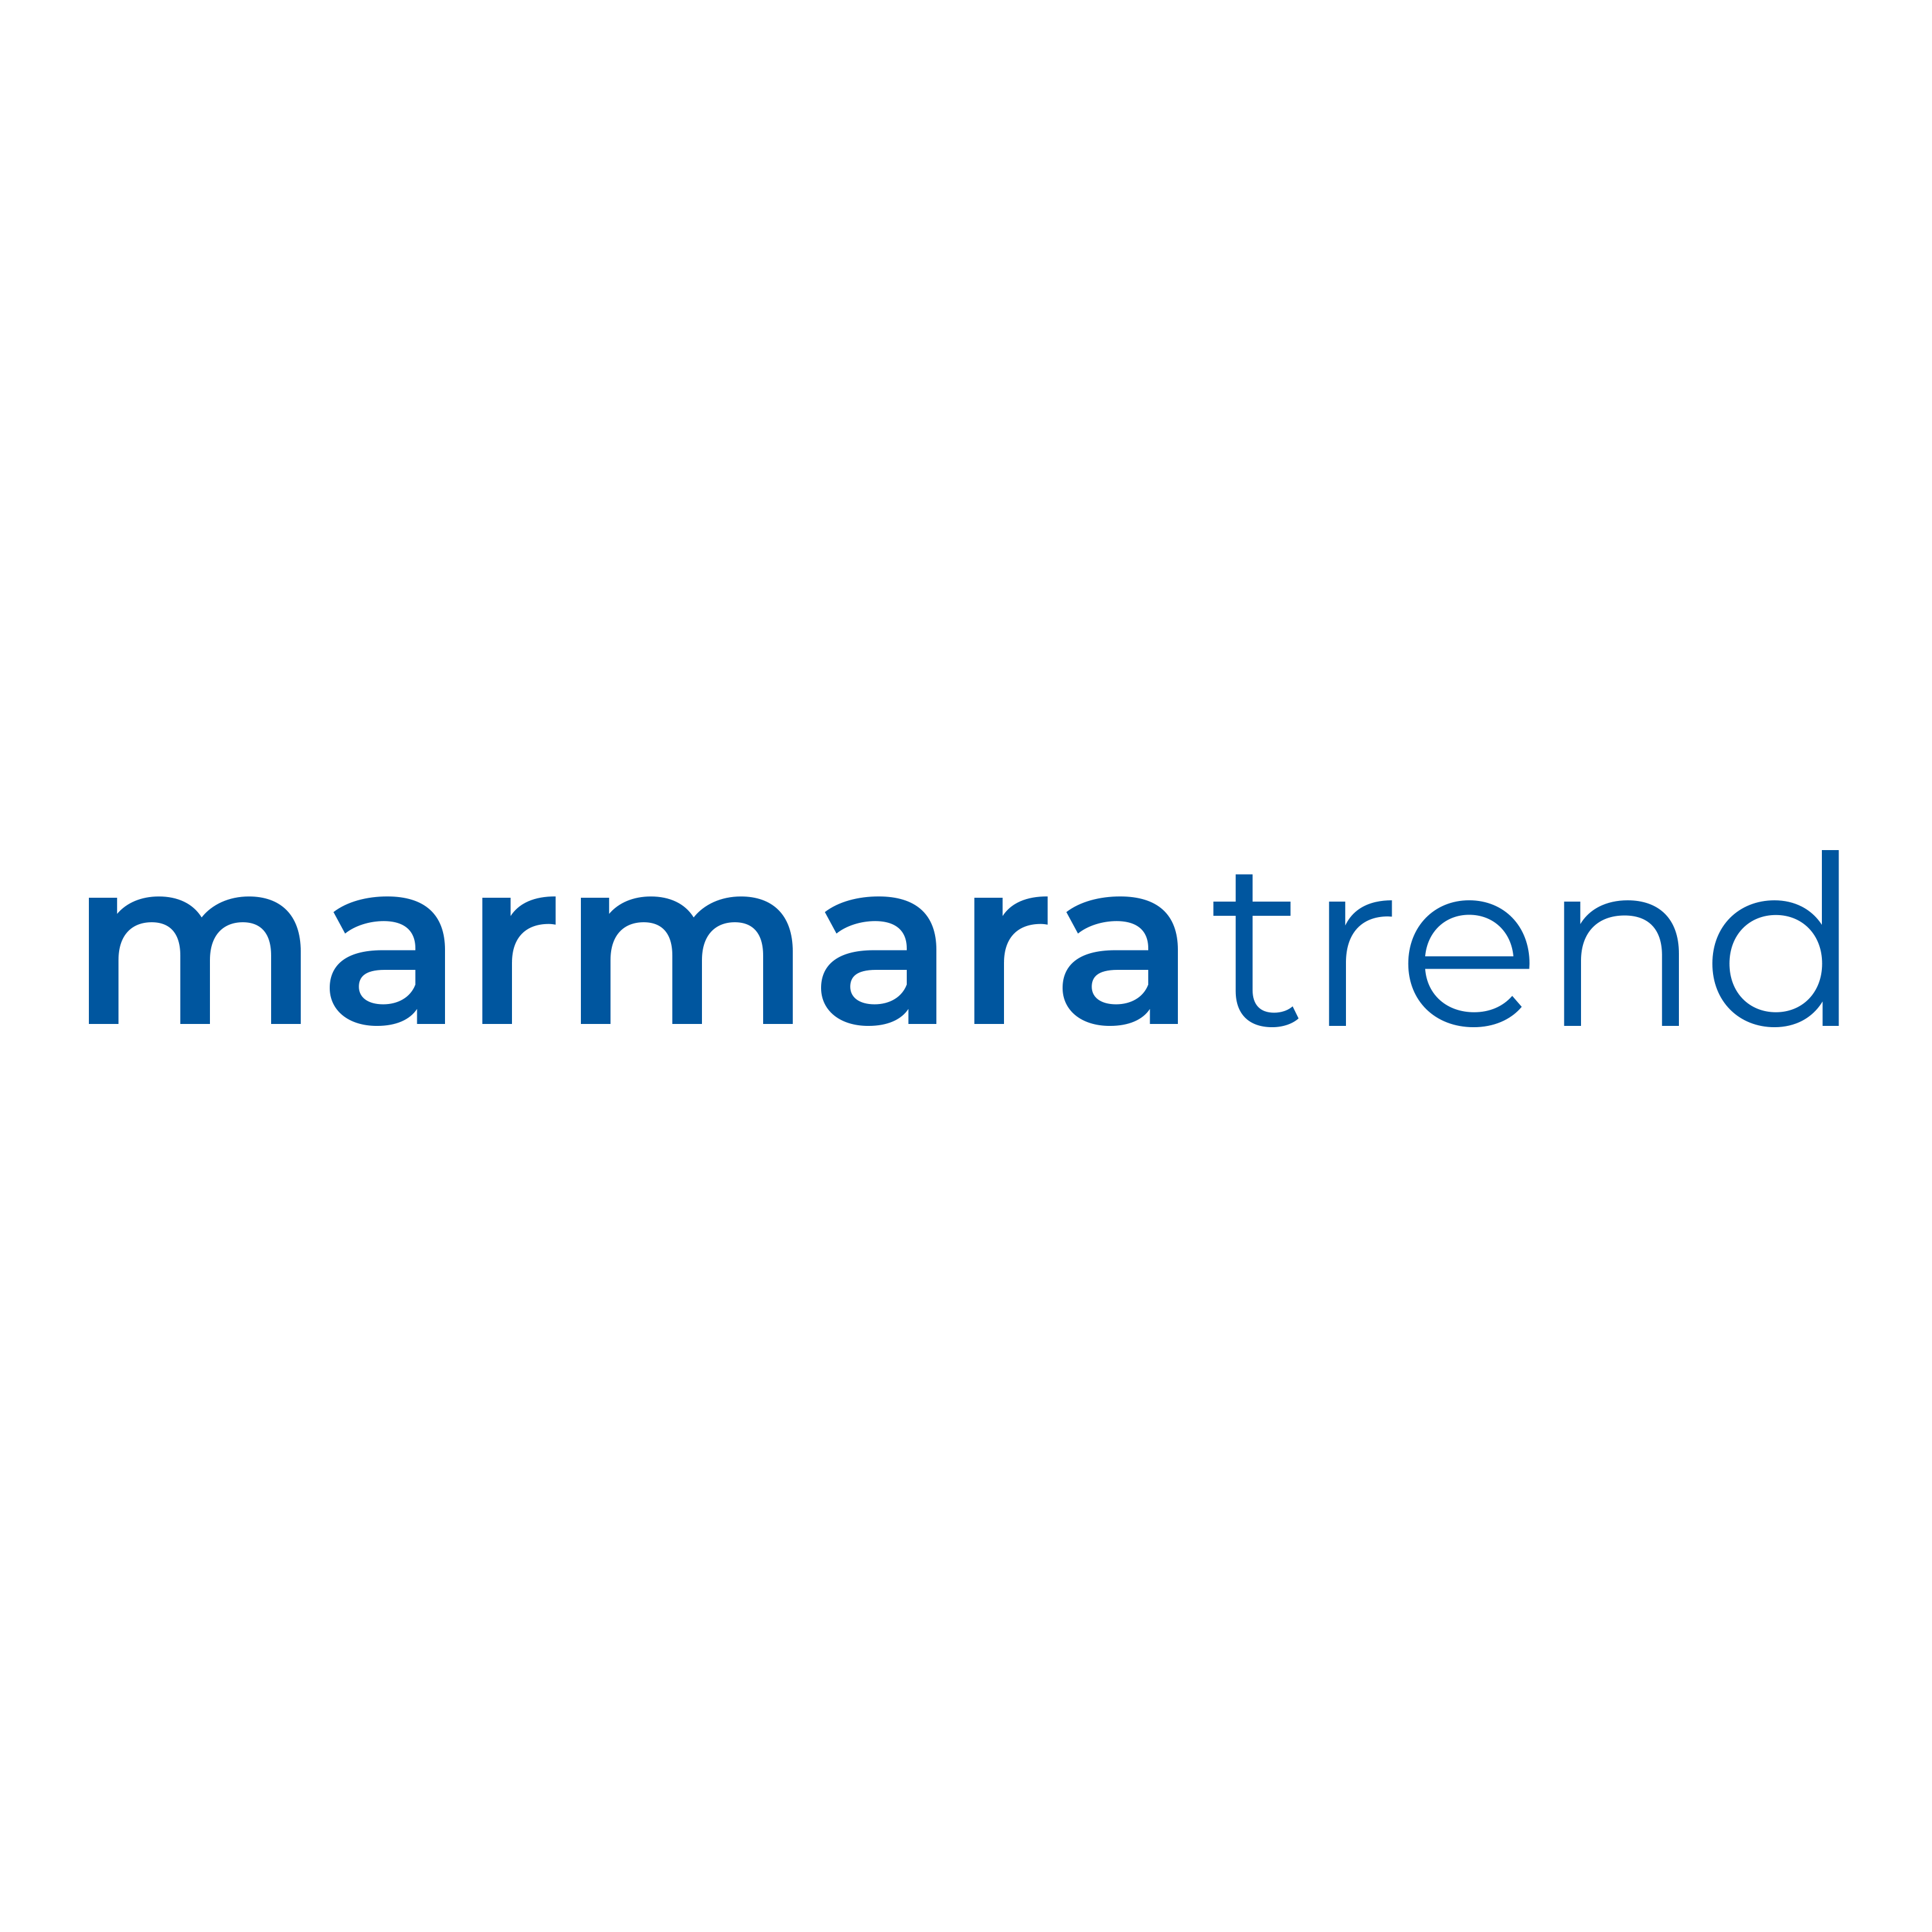 MarmaraTrend